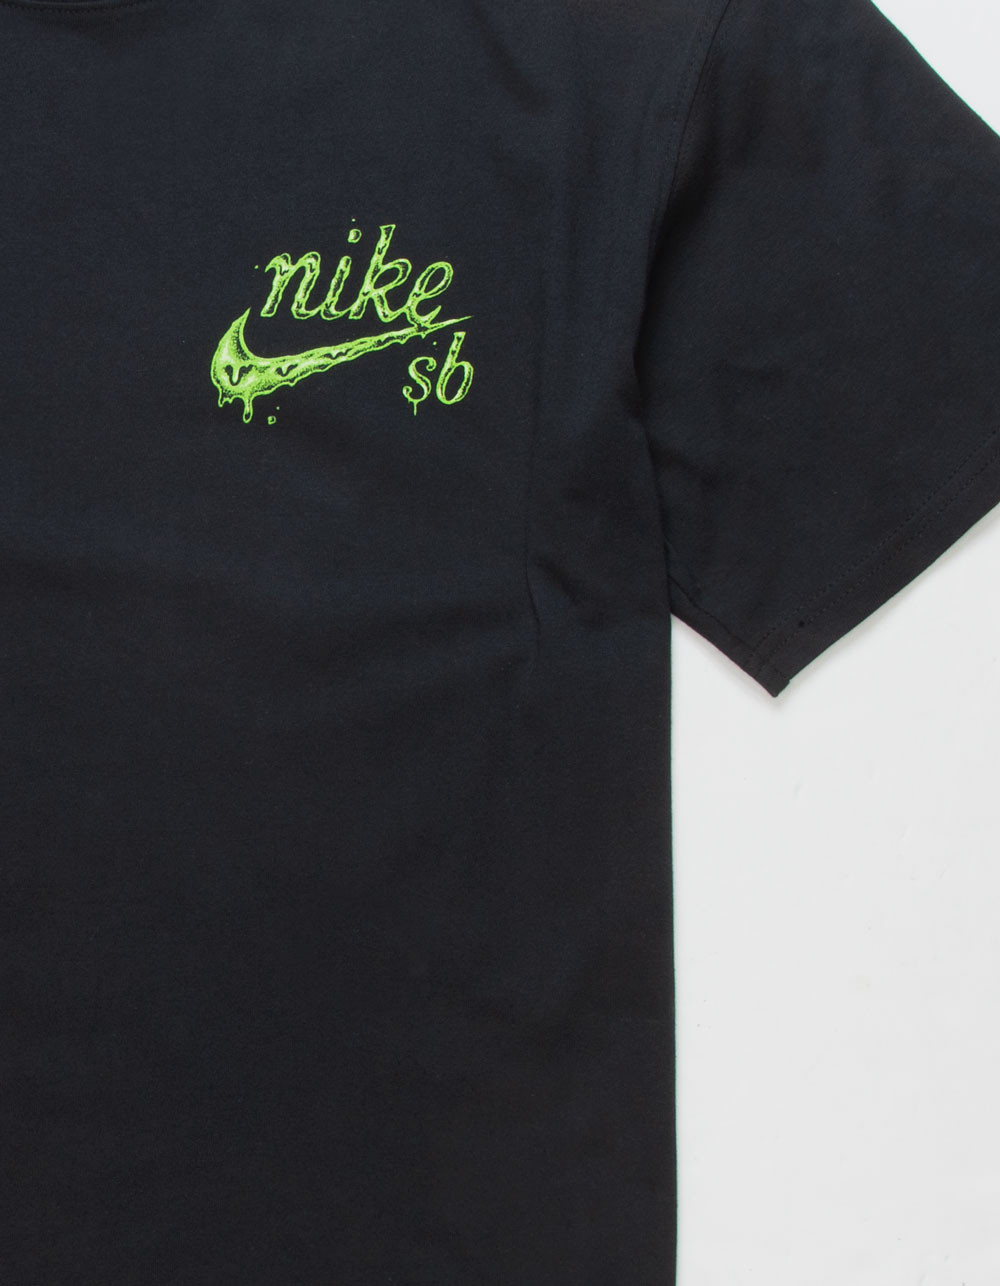 Nike Drip T-shirt (all sizes)  Mens casual outfits, Tee shirt brands,  Unisex tshirt